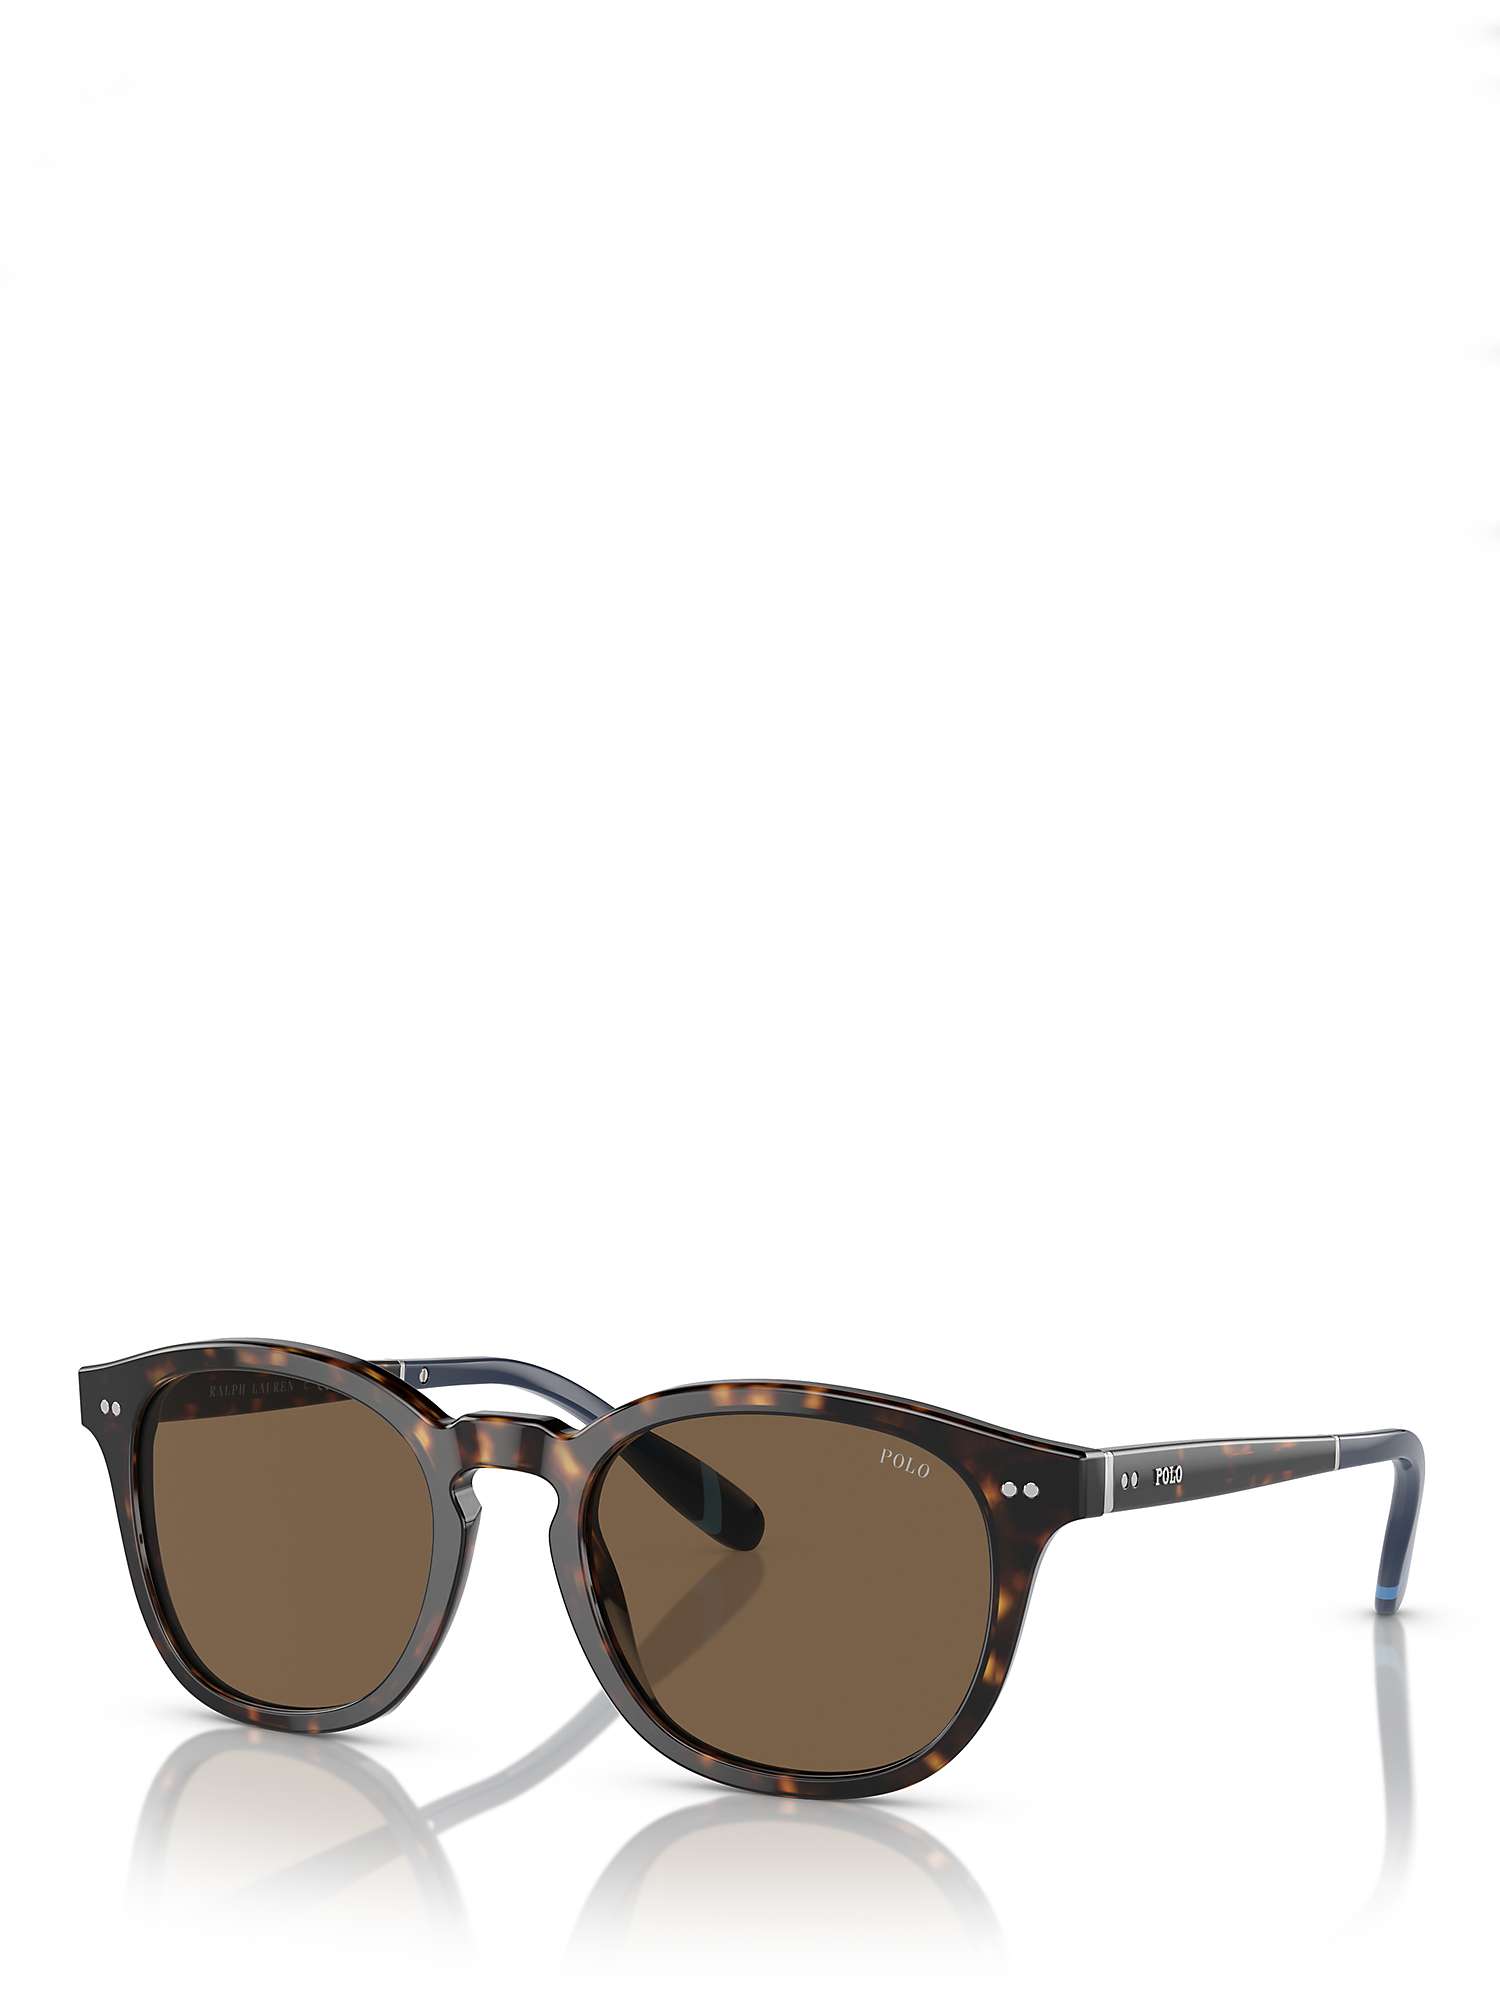 Buy Ralph Lauren PH4206 Men's Phantos Sunglasses Online at johnlewis.com